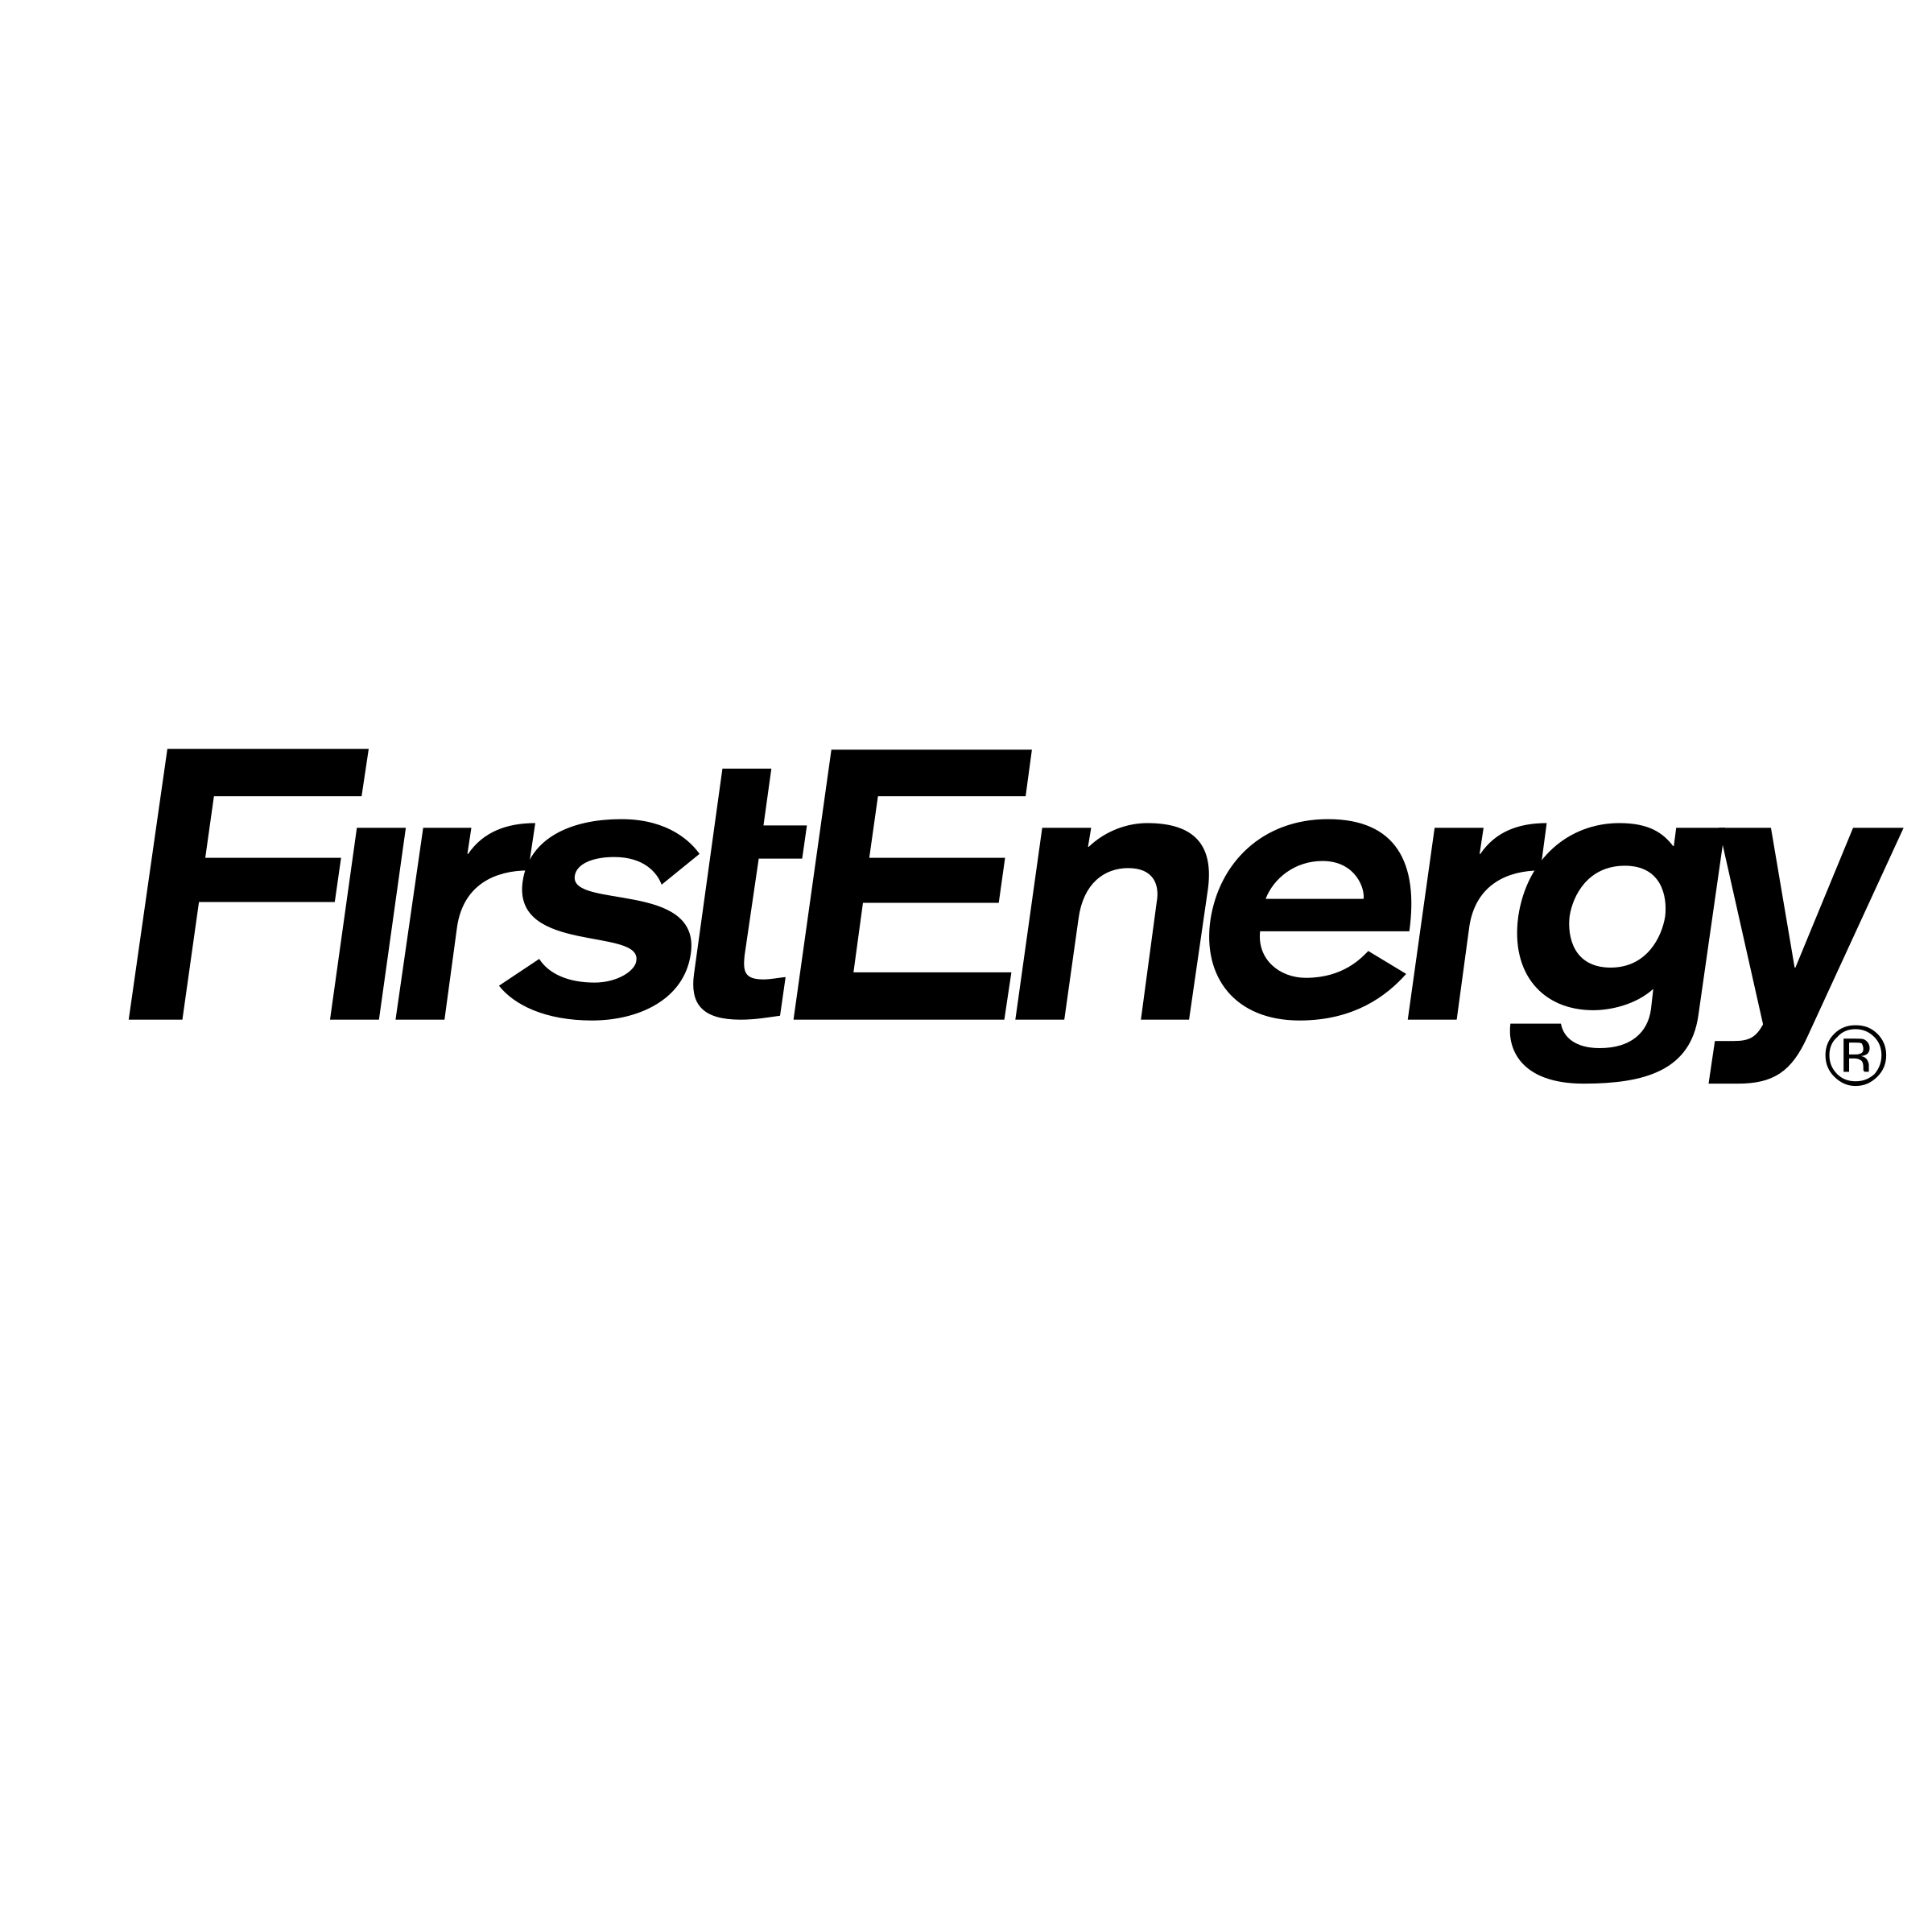 FirstEnergy Logo - FirstEnergy Logo PNG Transparent & SVG Vector - Freebie Supply